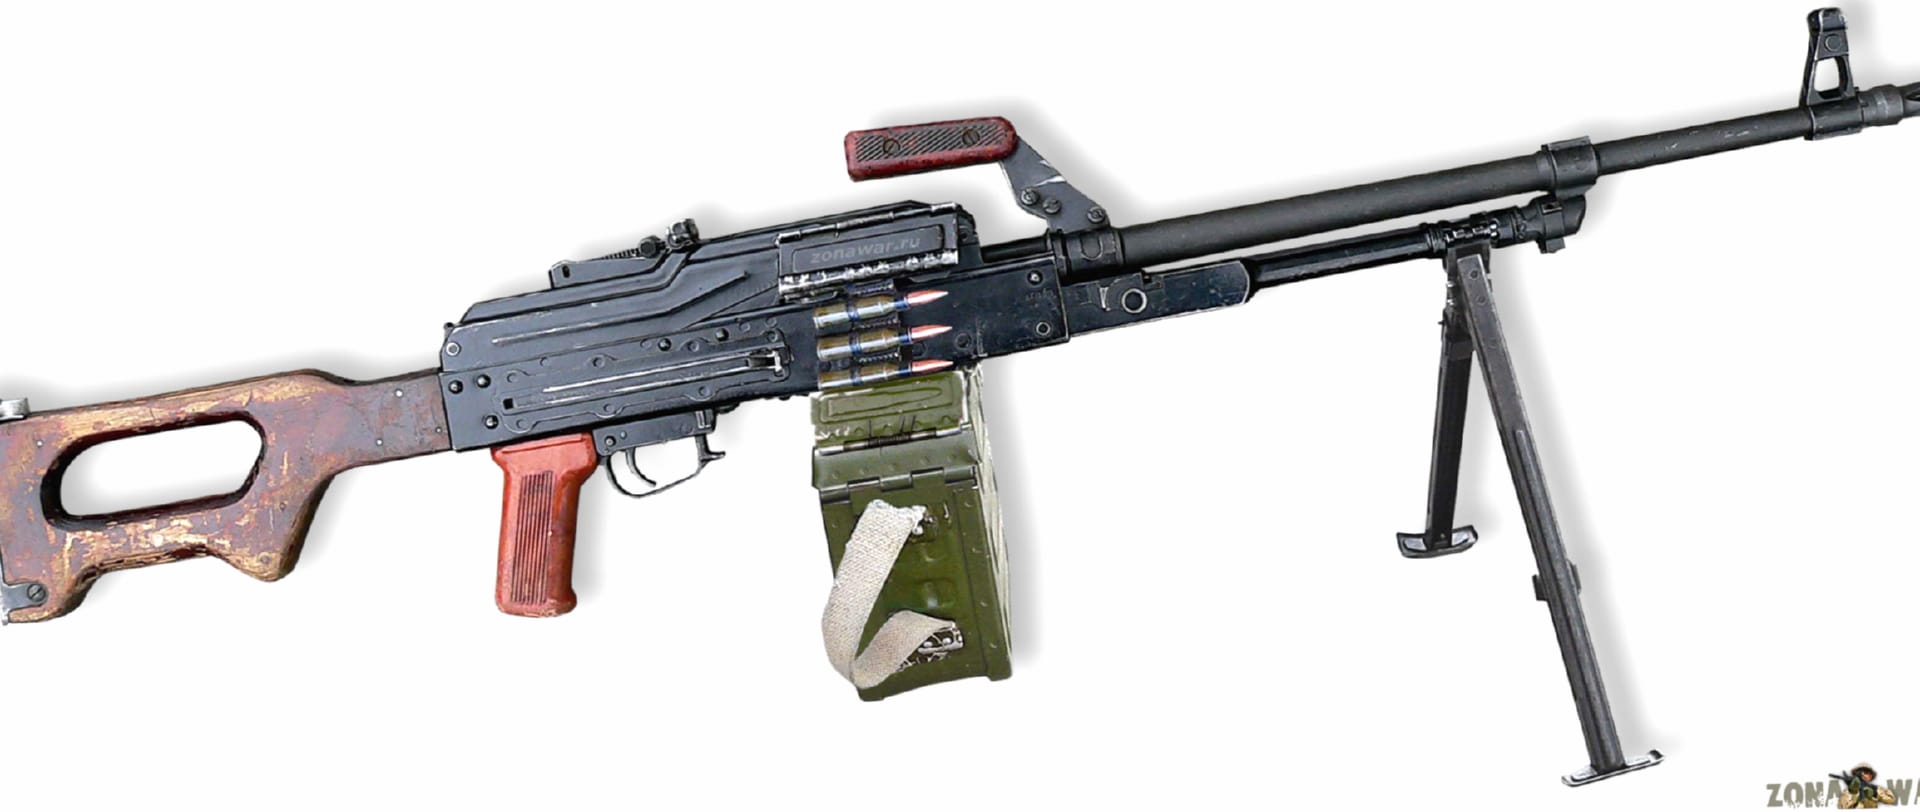 Kalashnikov Pk Rifle at 1024 x 768 size wallpapers HD quality